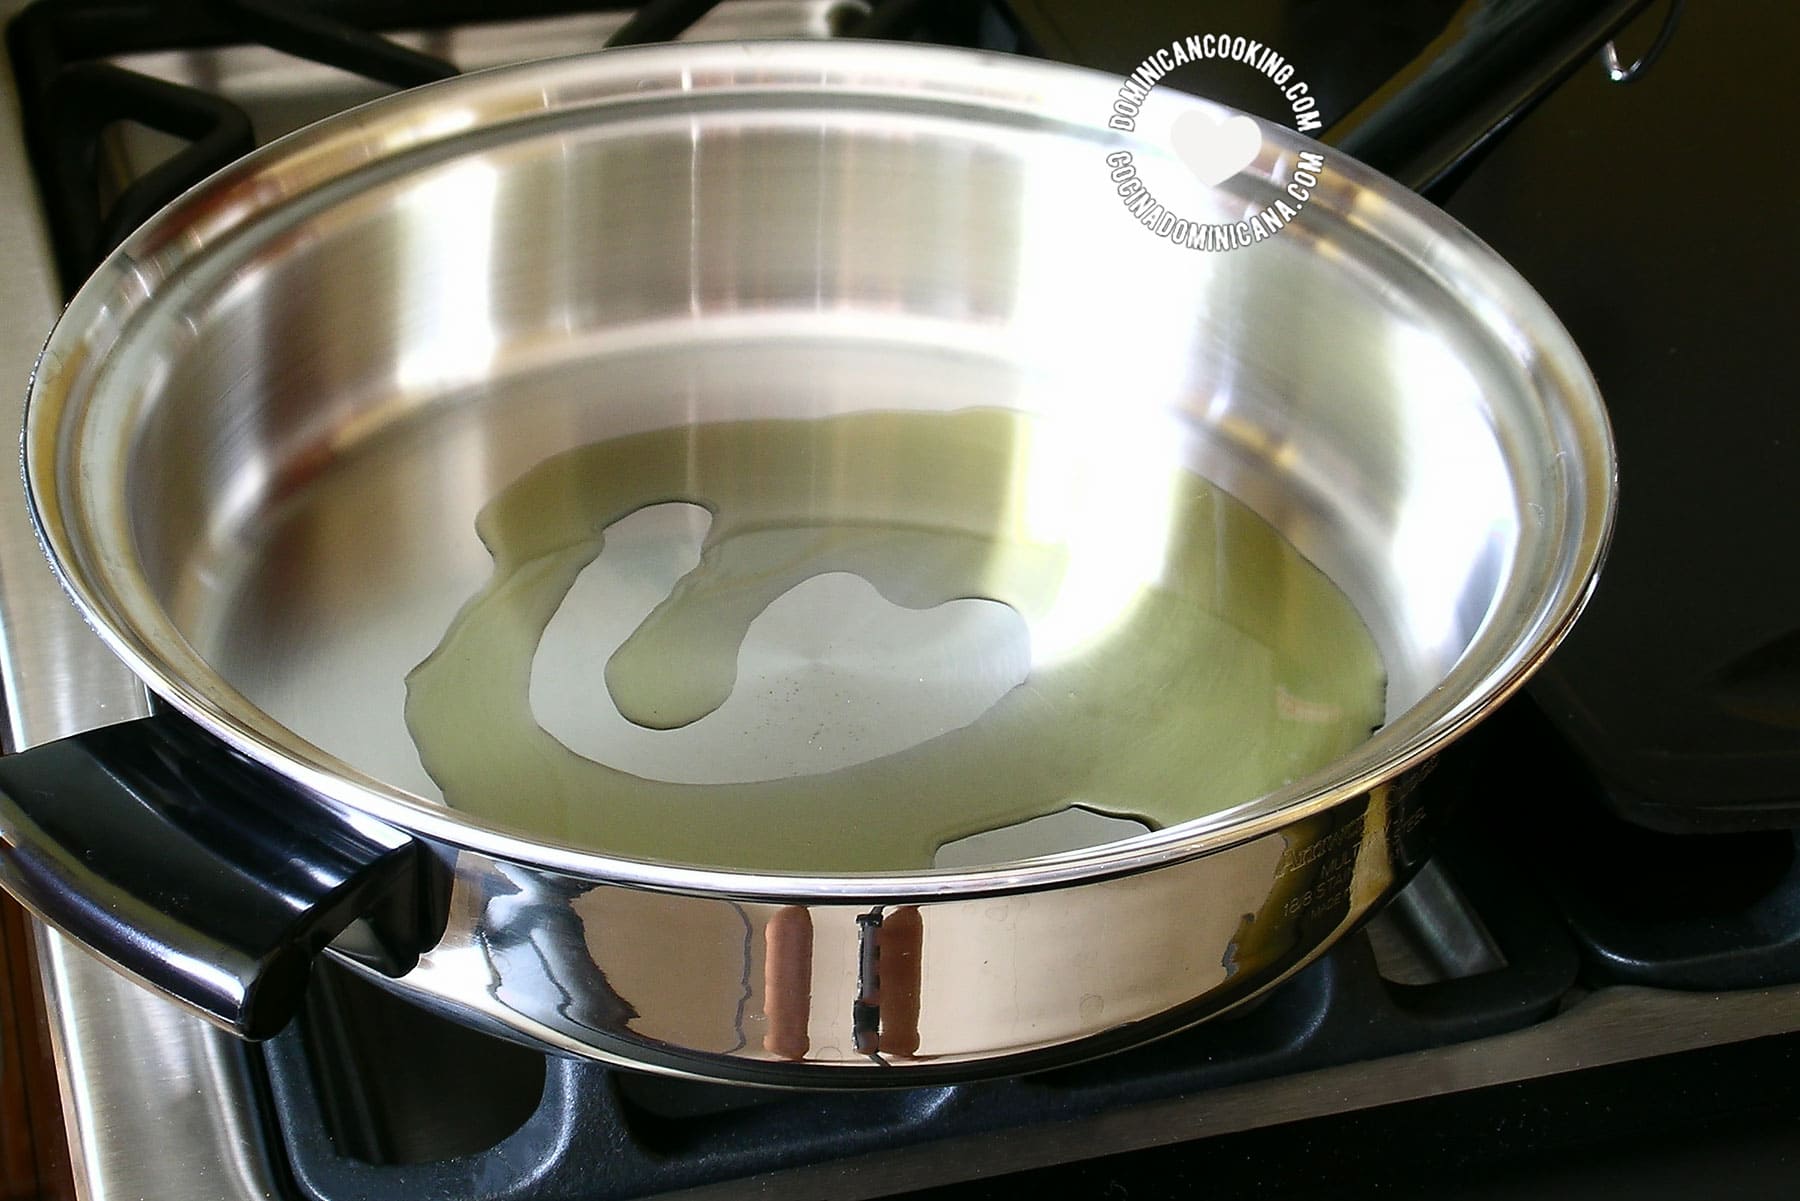 Stainless steel pan.